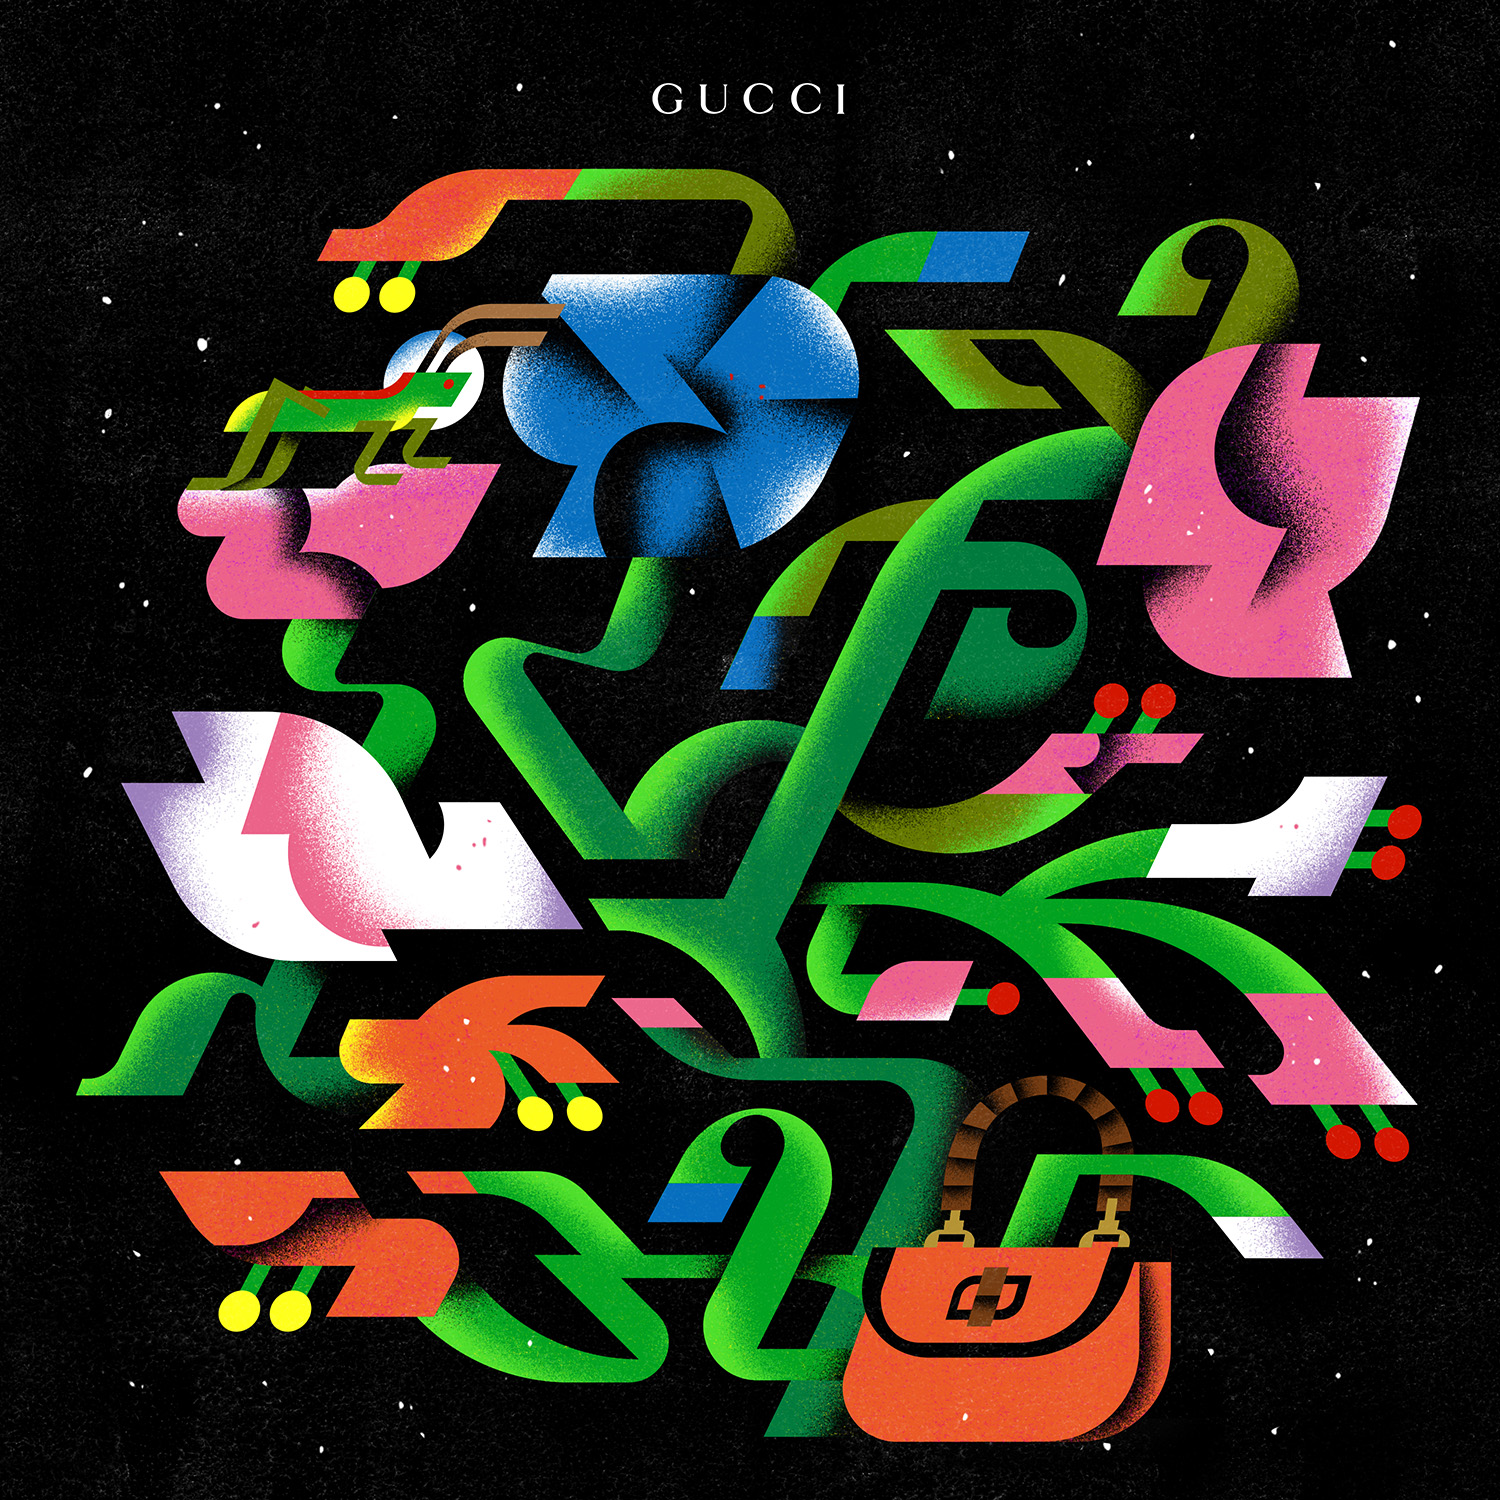 Supreme Cool Gucci Wallpaper  Sfondi per iphone, Sfondi iphone, Sfondi  carini